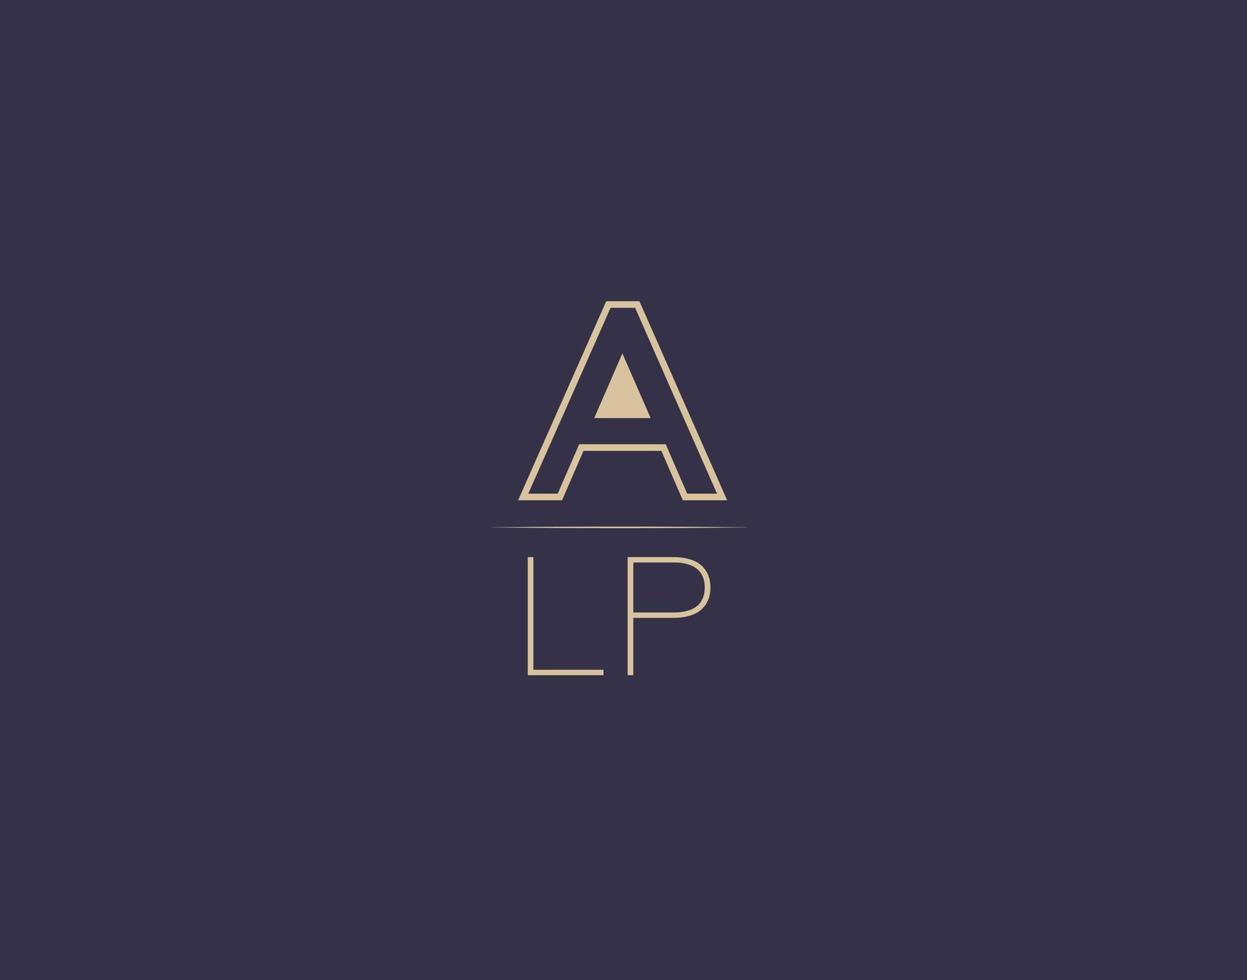 ALP letter logo design modern minimalist vector images